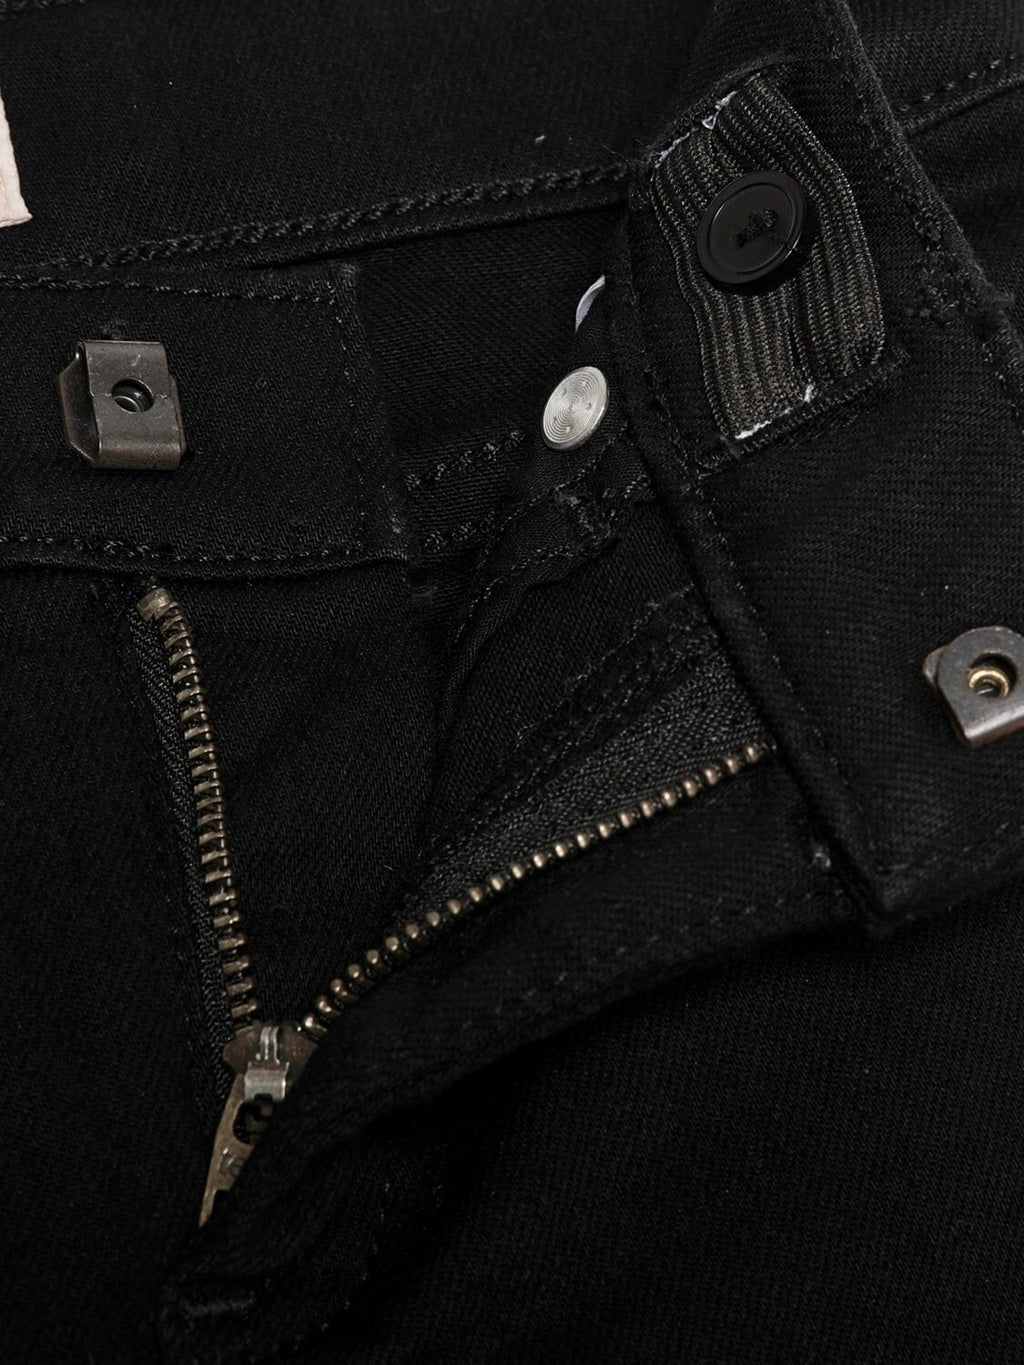 Jeans ajustados - denim negro